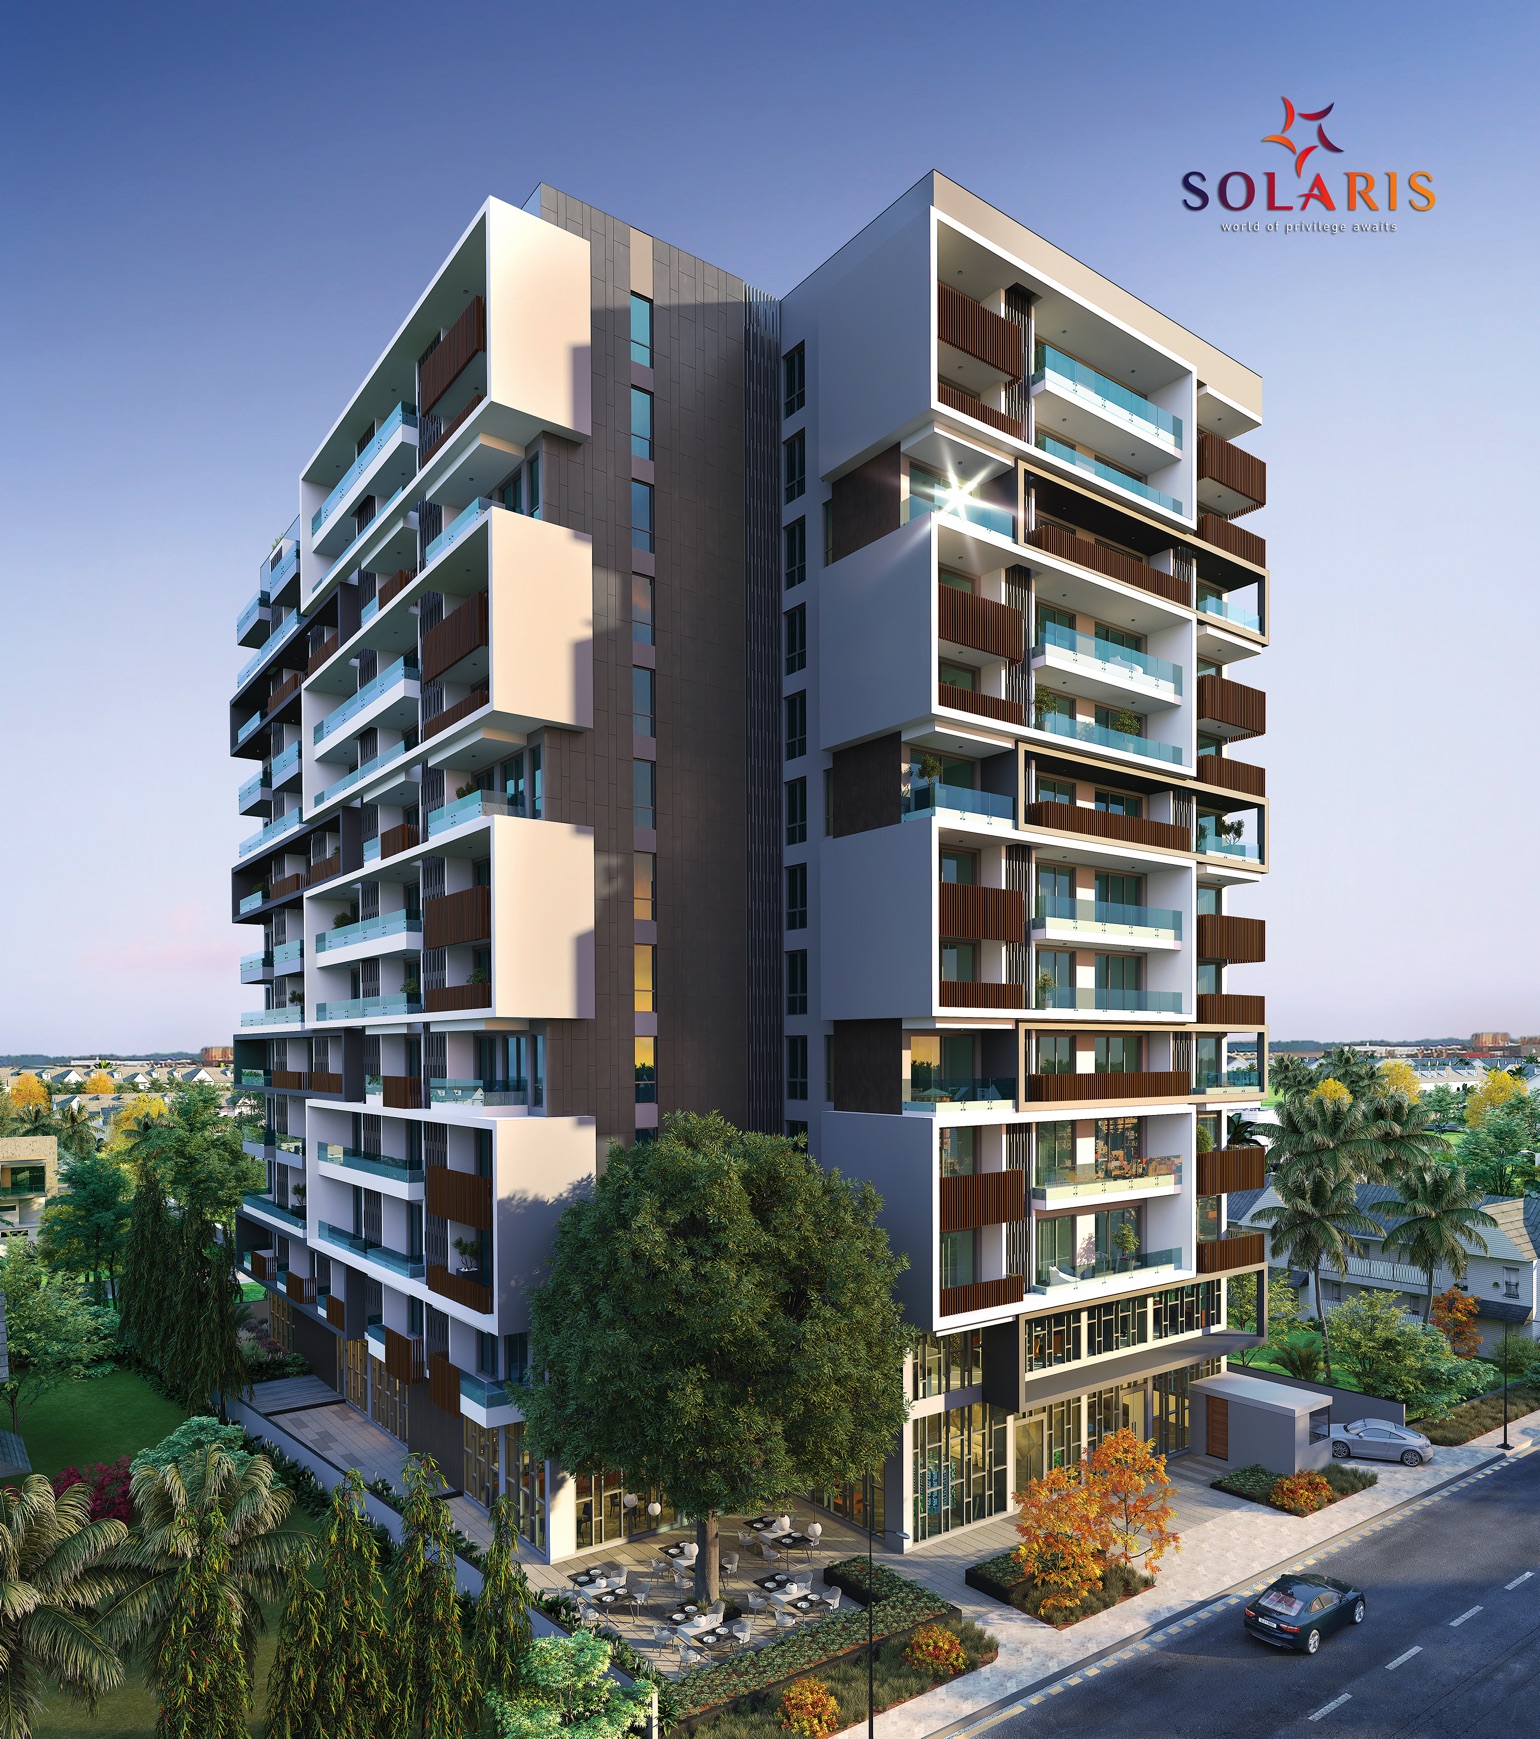 https://swamiindiaghanaltd.com/solaris-apartments/wp-content/uploads/2021/02/5.jpg